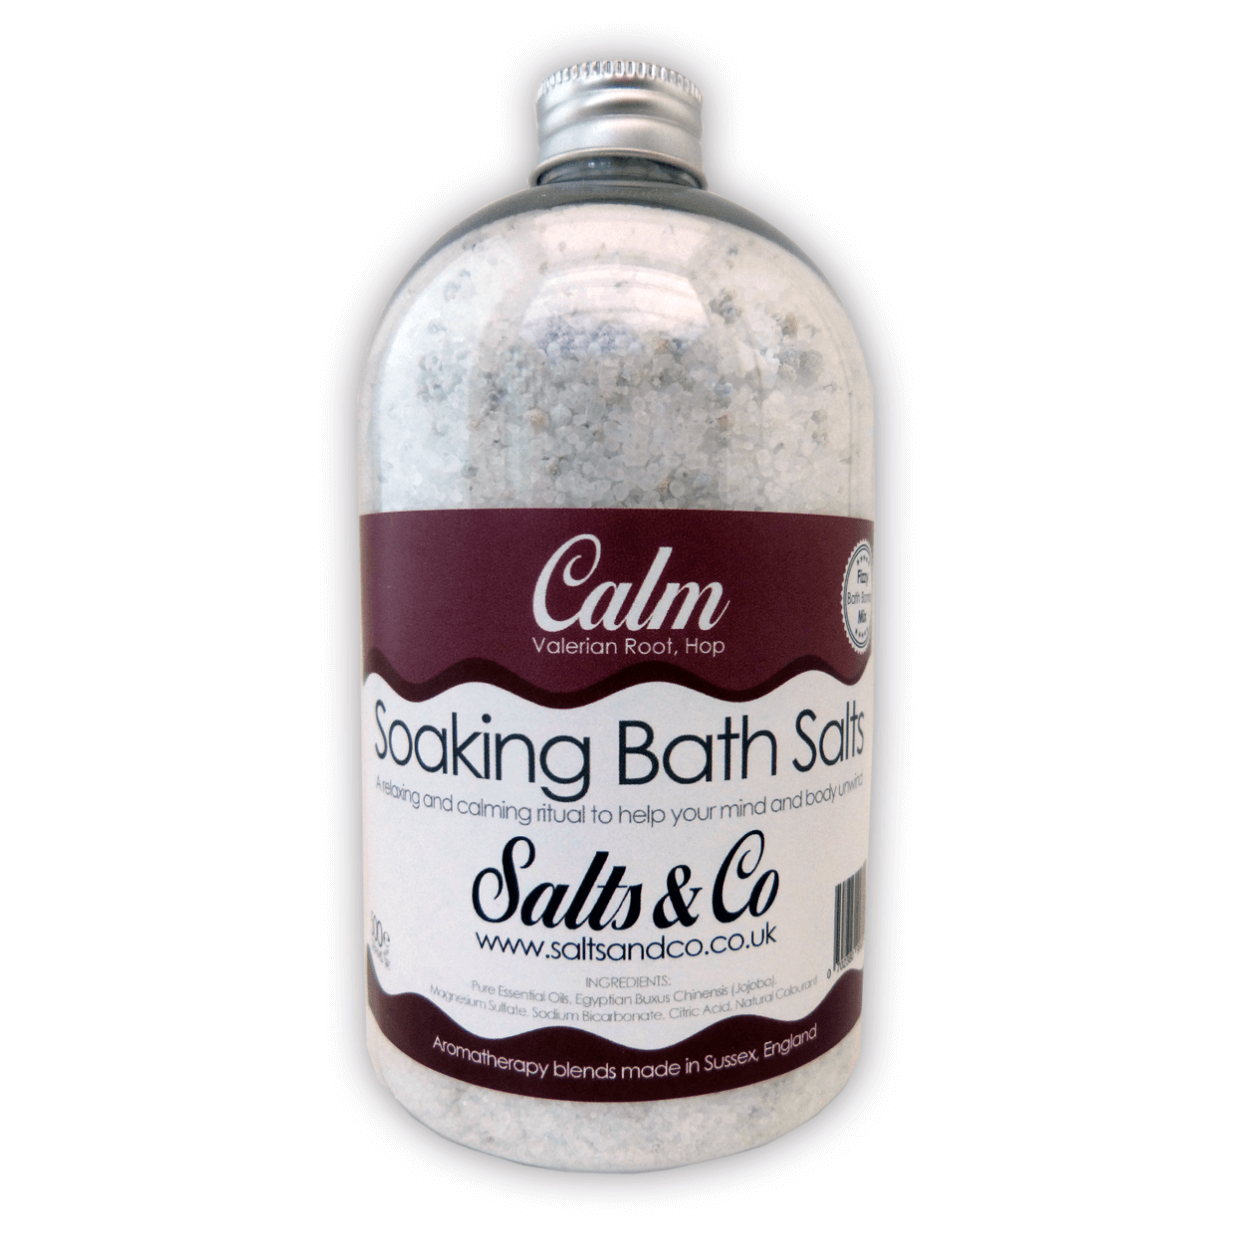 Calm Bath Salts - Valerian Root & Hop essential oils - Spa Bath Salts - 100% Epsom Salts